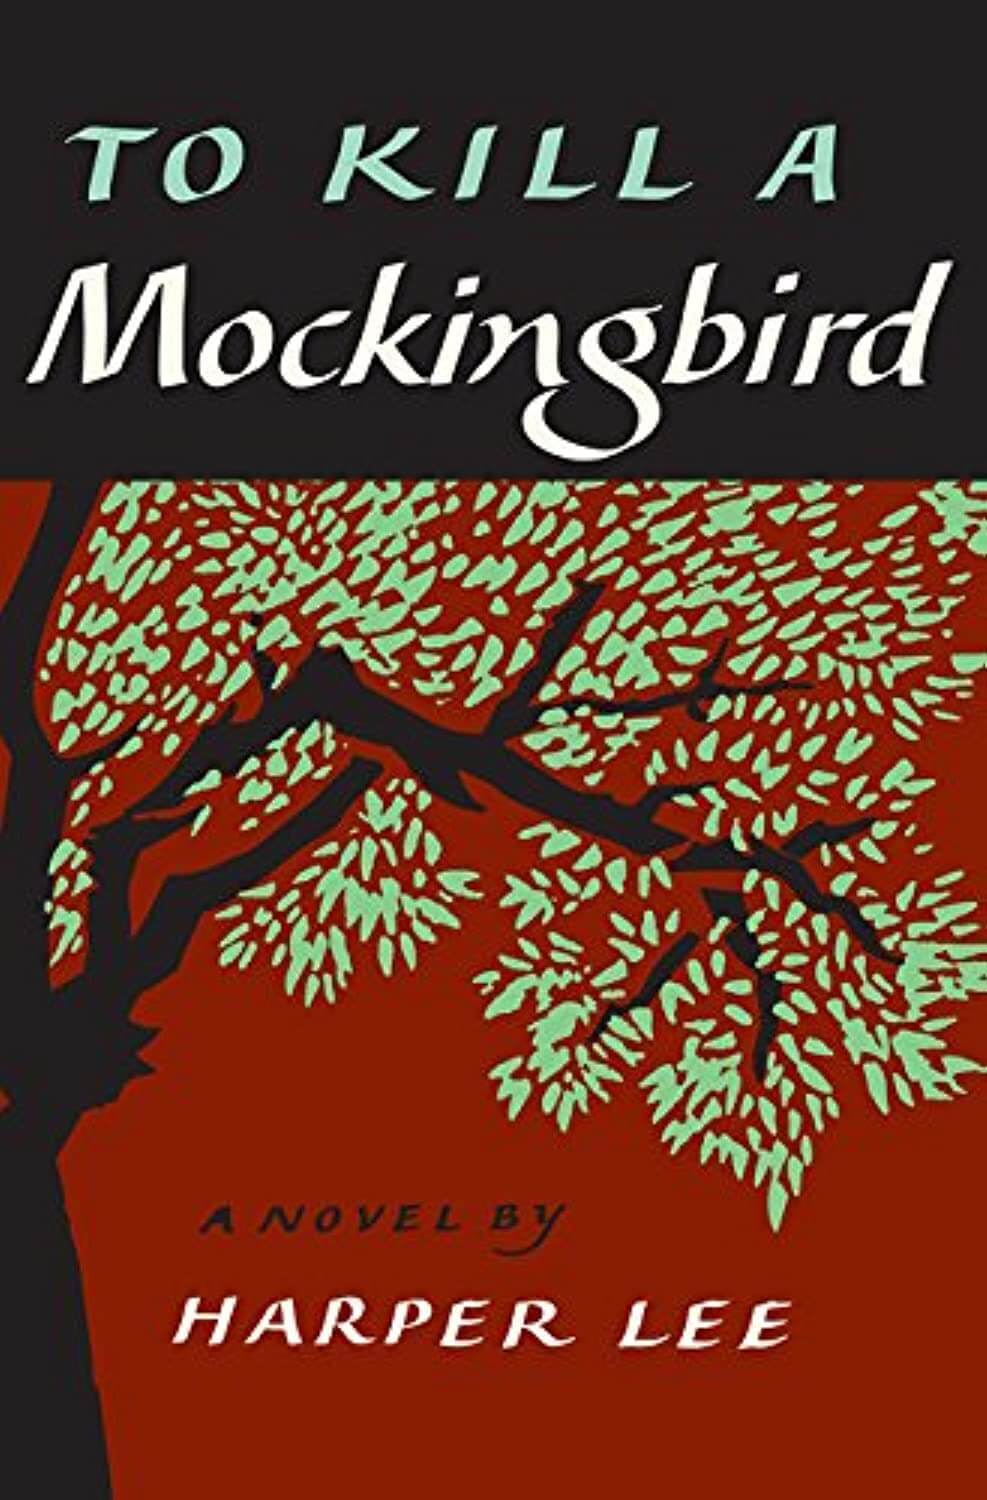 “To Kill A Mockingbird” by Harper Lee (1960)